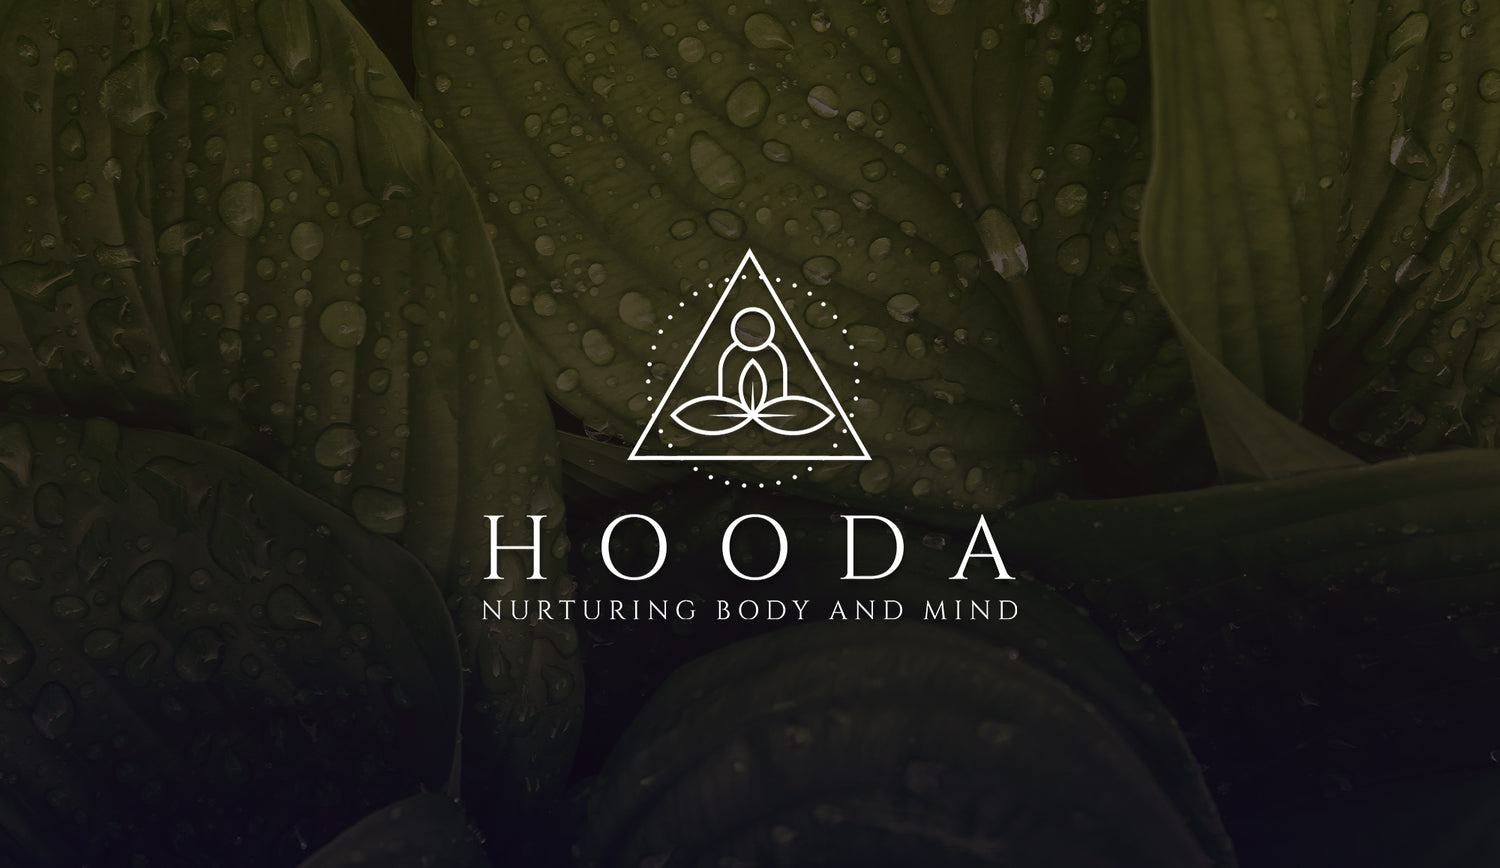 Hooda Holistic Health CBD and Health Products To Bring you balance